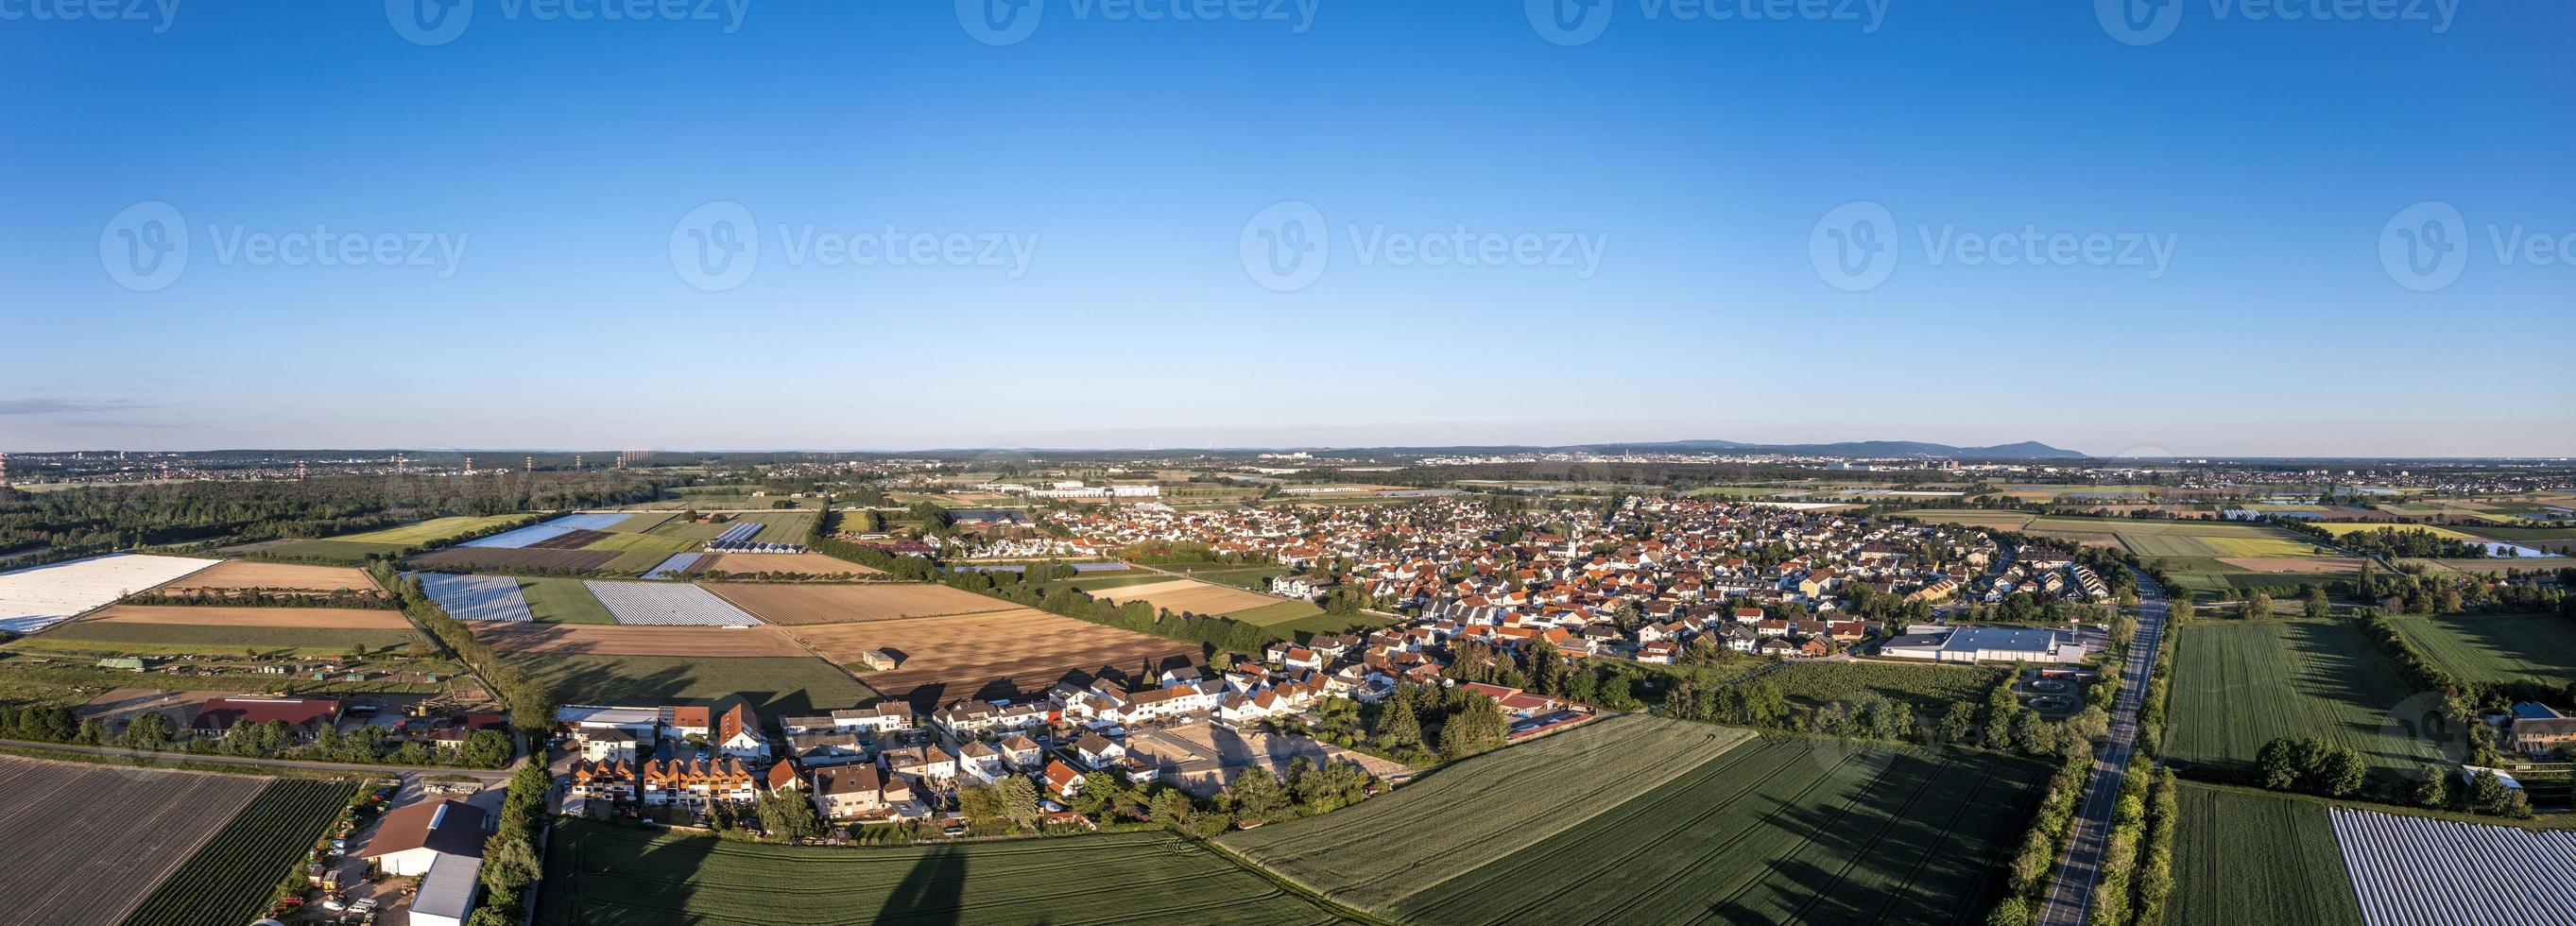 Drone image of village Graefenhausen near Darmstadt in evening light photo